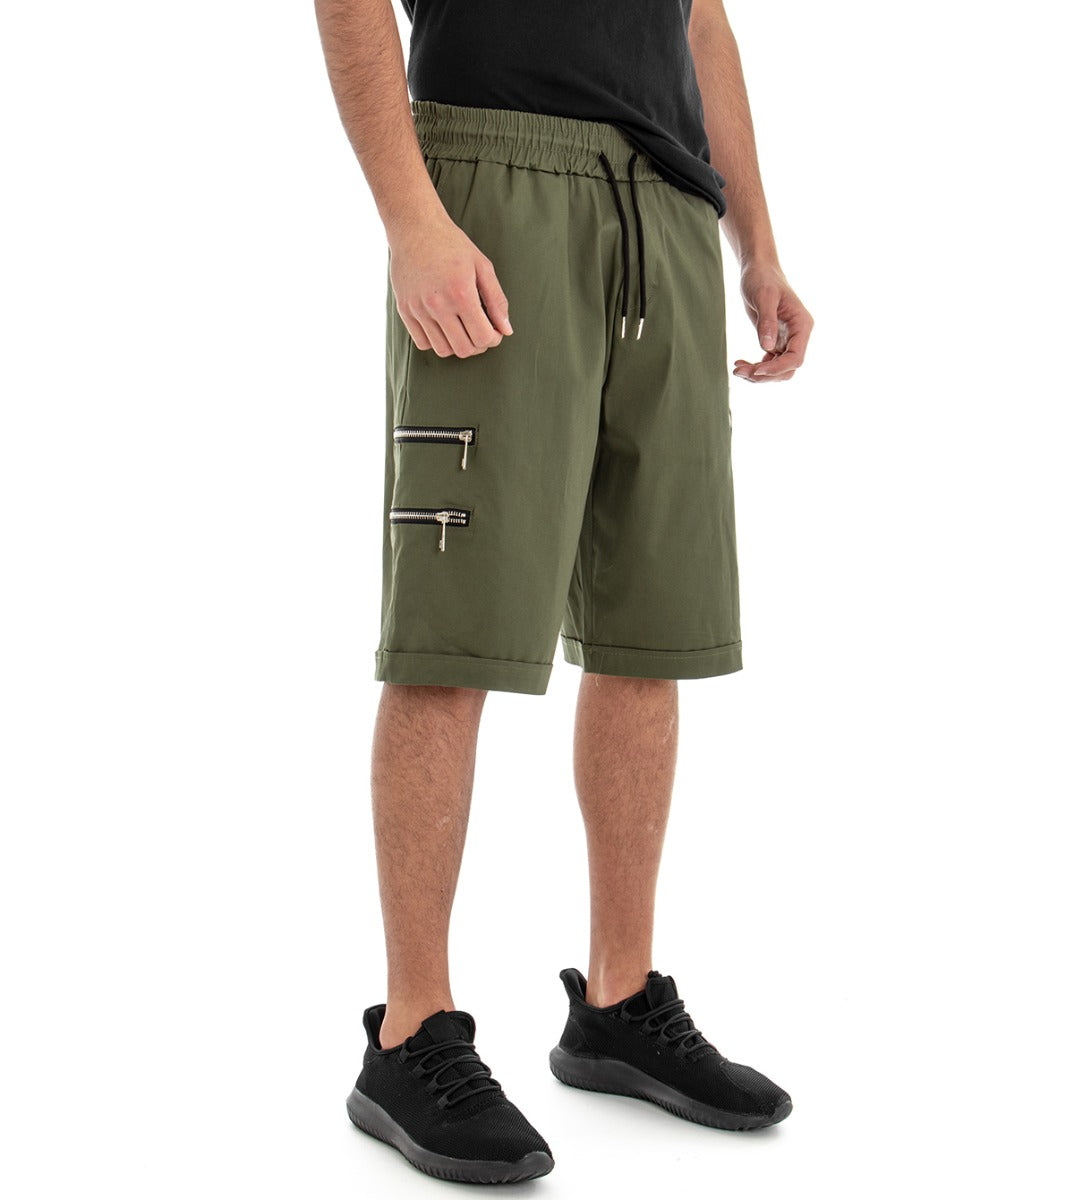 Bermuda Pantaloncino Uomo Corto Verde Elastico GIOSAL-PC1355A